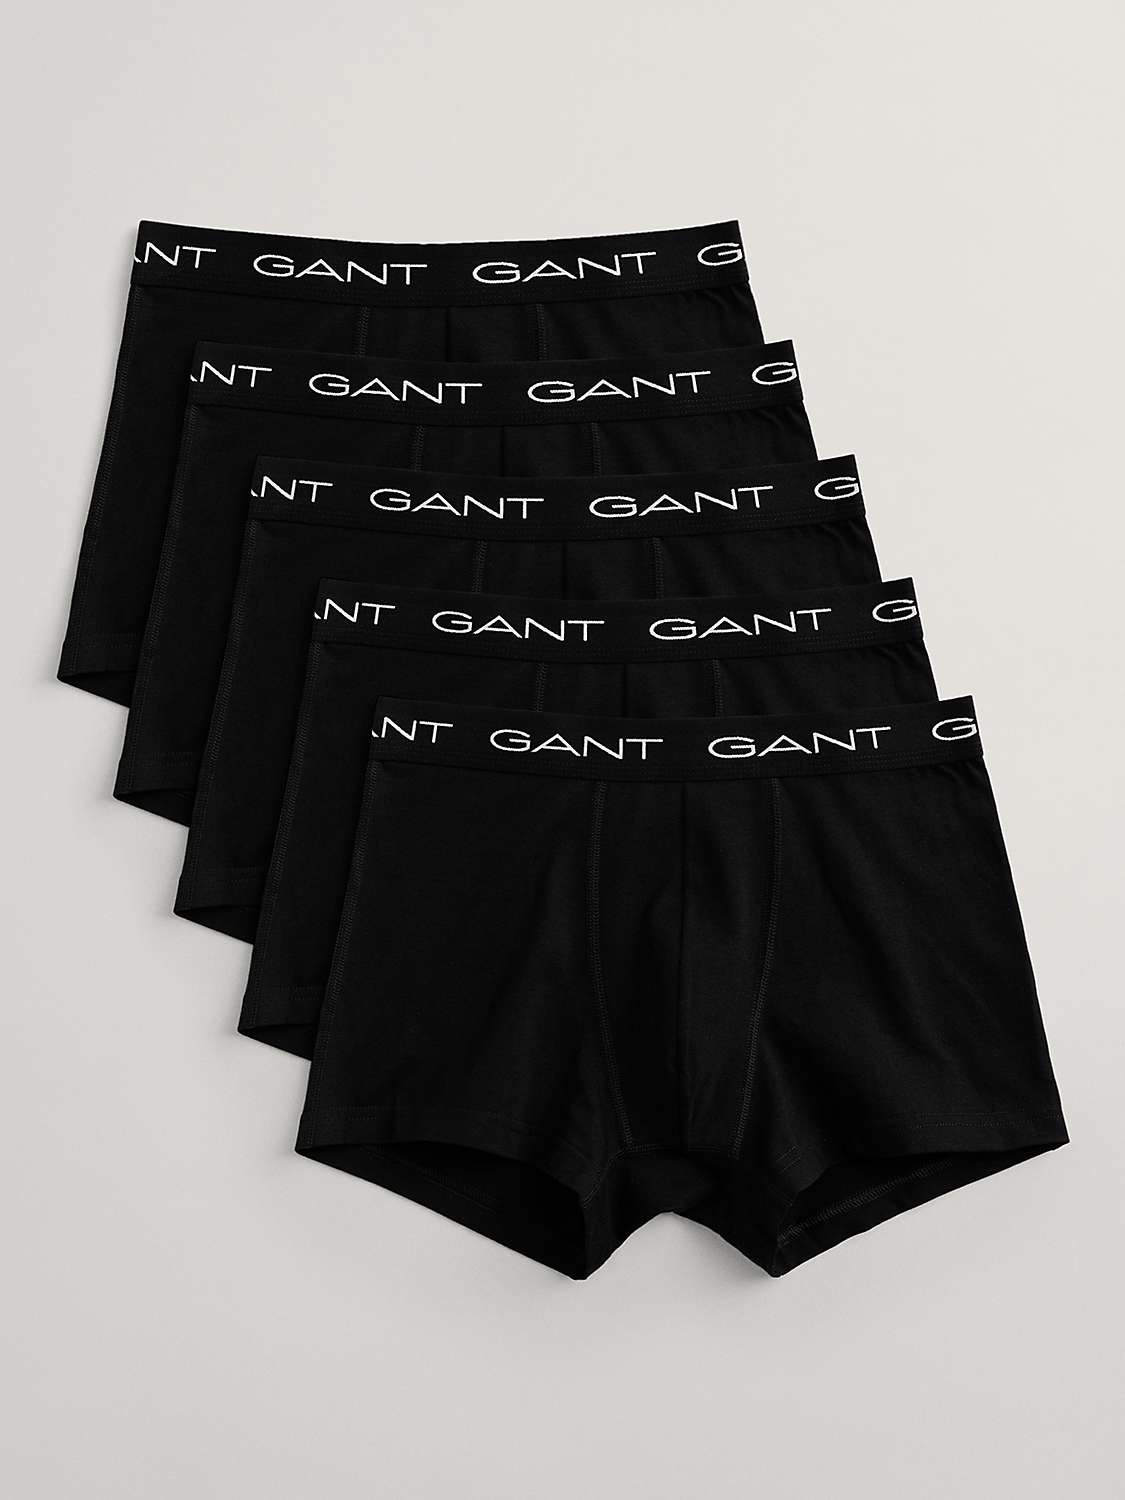 Buy GANT Slim Fit Short Length Trunks, Pack of 5 Online at johnlewis.com